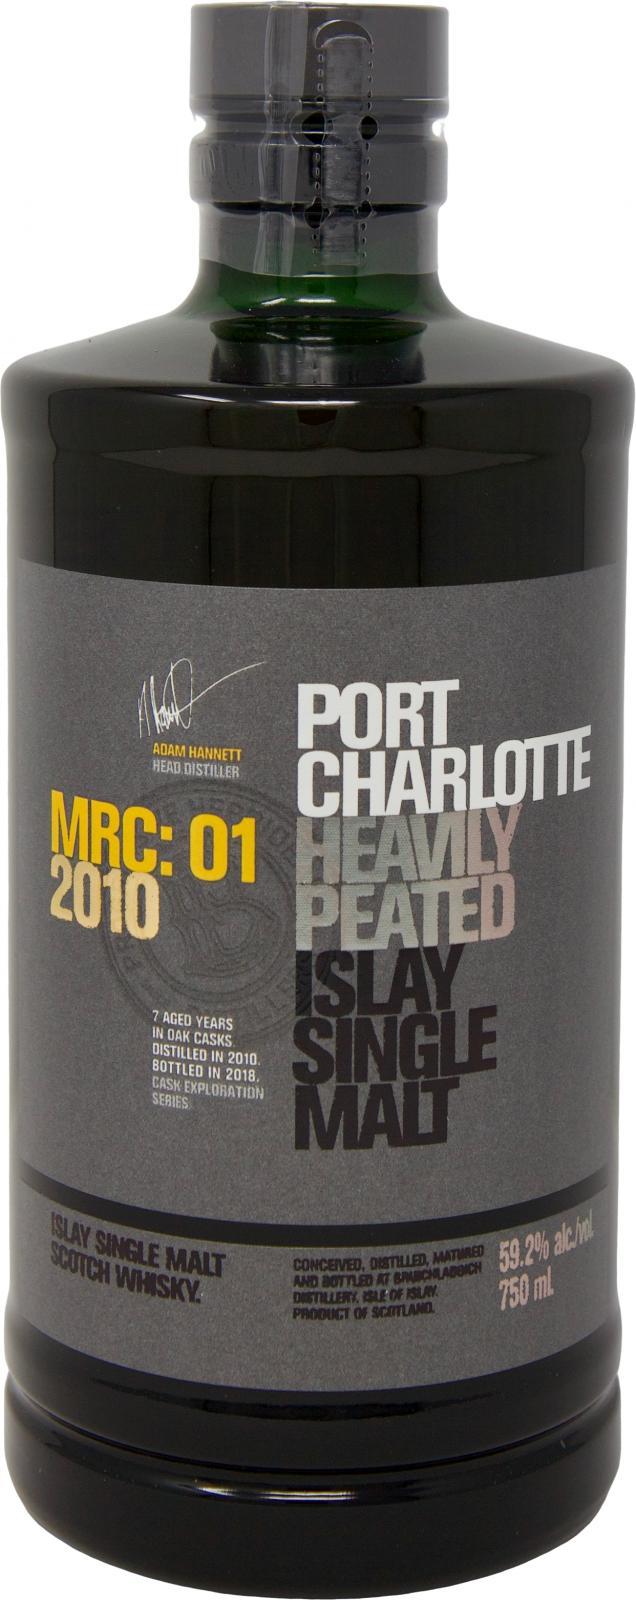 Port Charlotte MRC: 01 2010